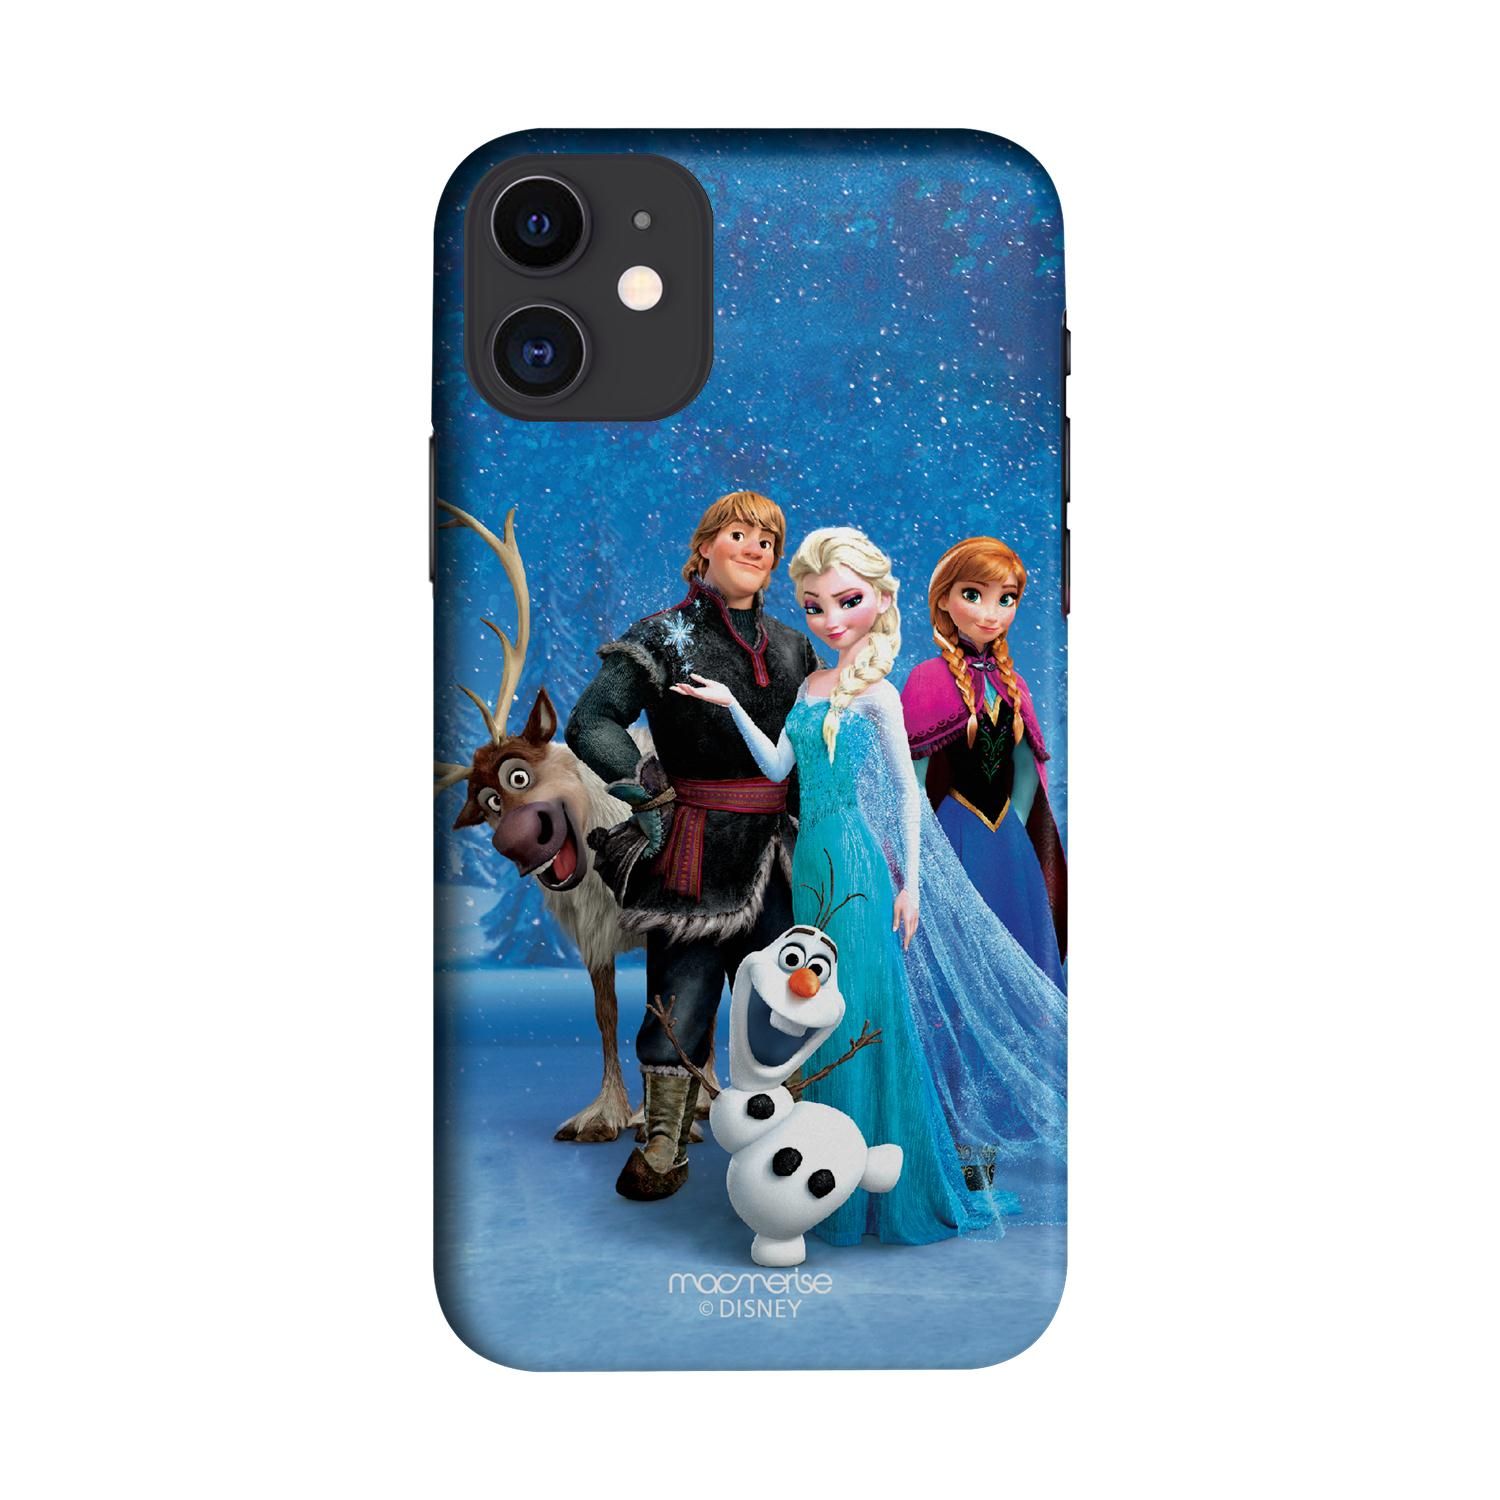 Buy Frozen together - Sleek Phone Case for iPhone 11 Online